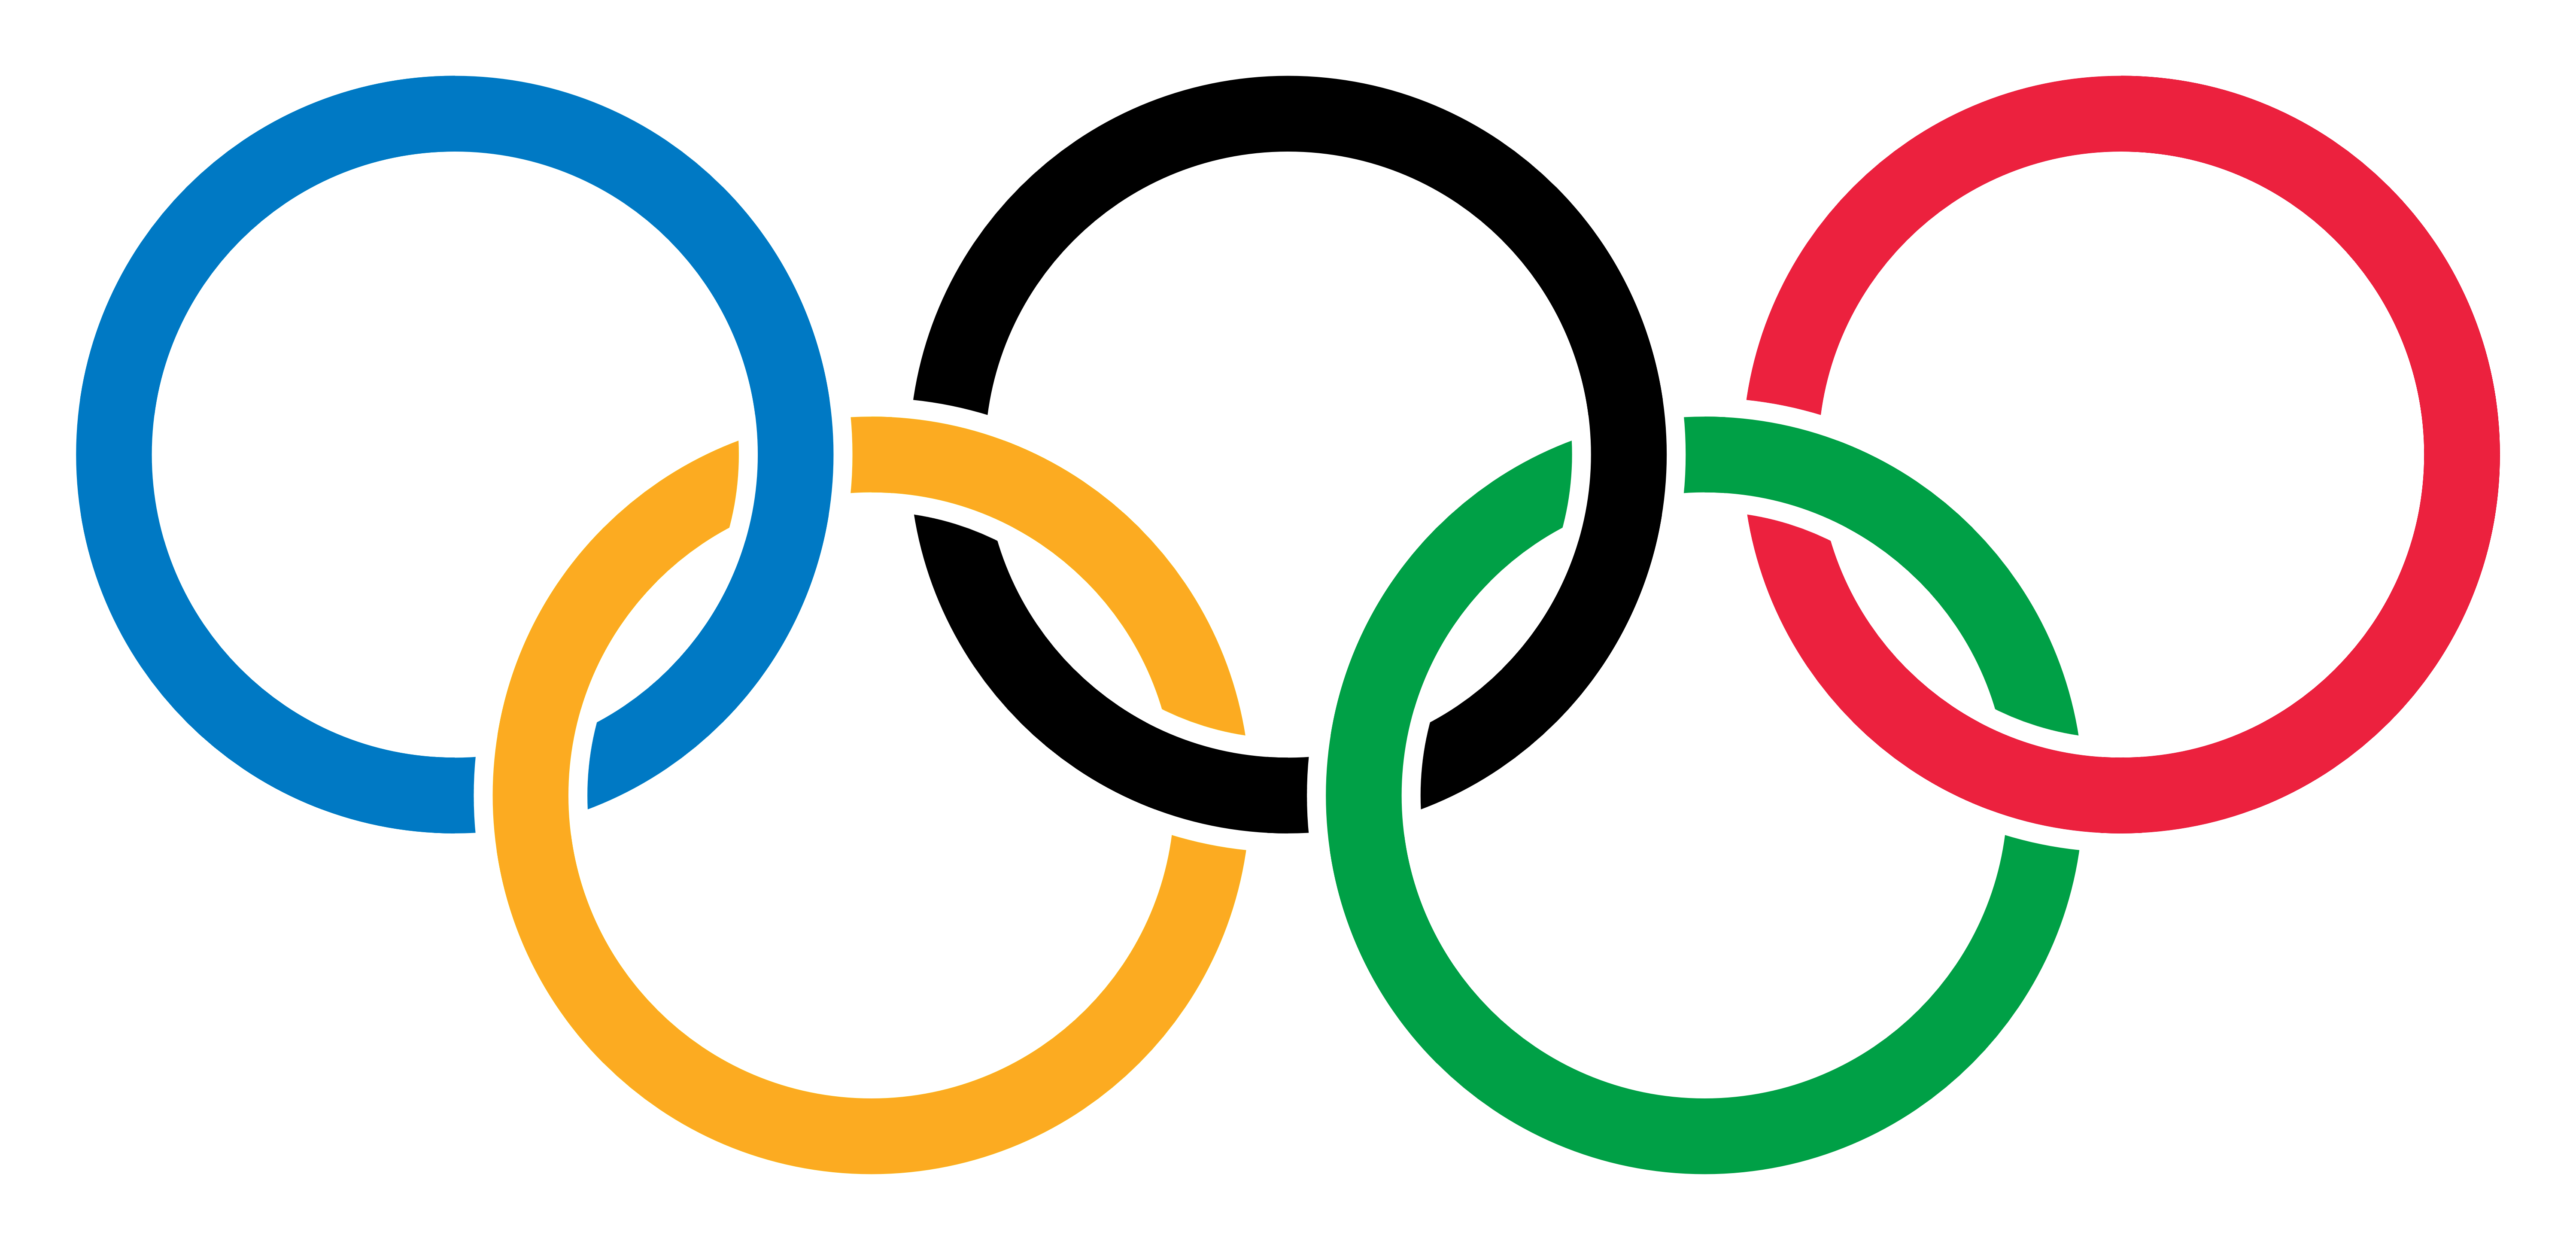 Nine best Olympic logos - The Tribune